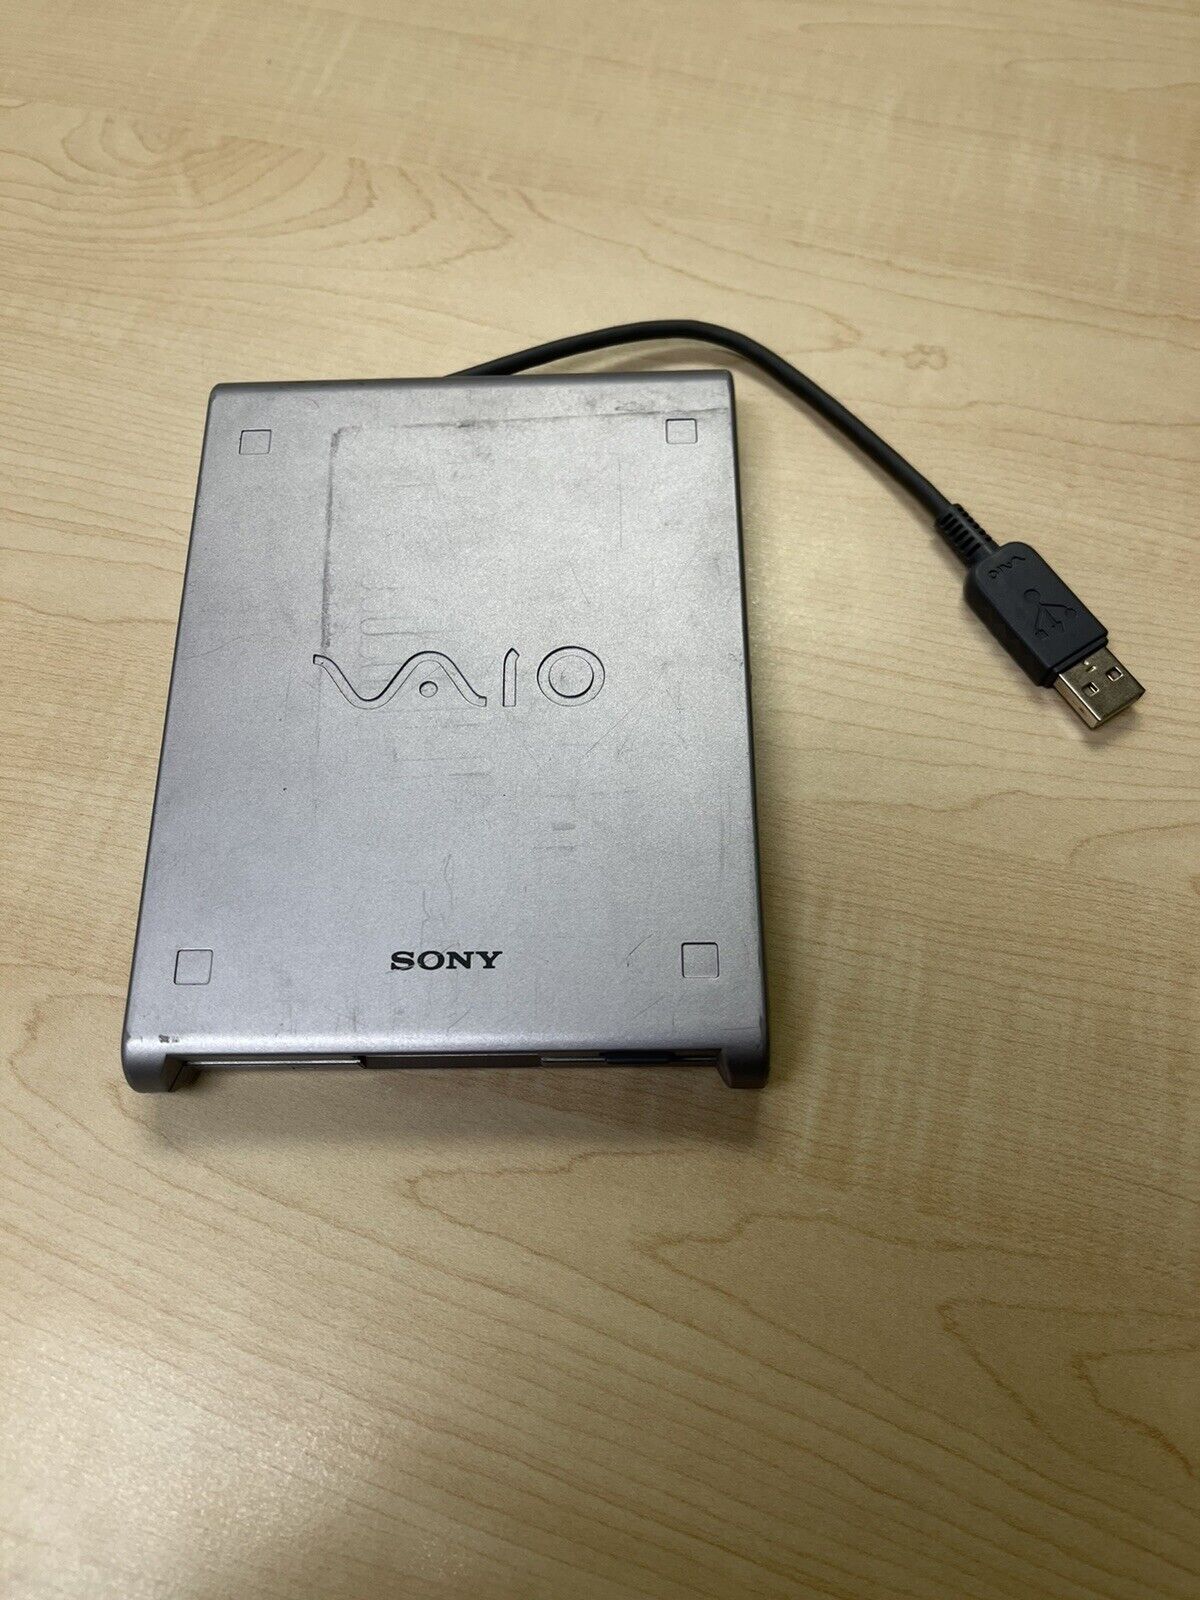 Sony Vaio PCGA-UFD5 Portable 3.5